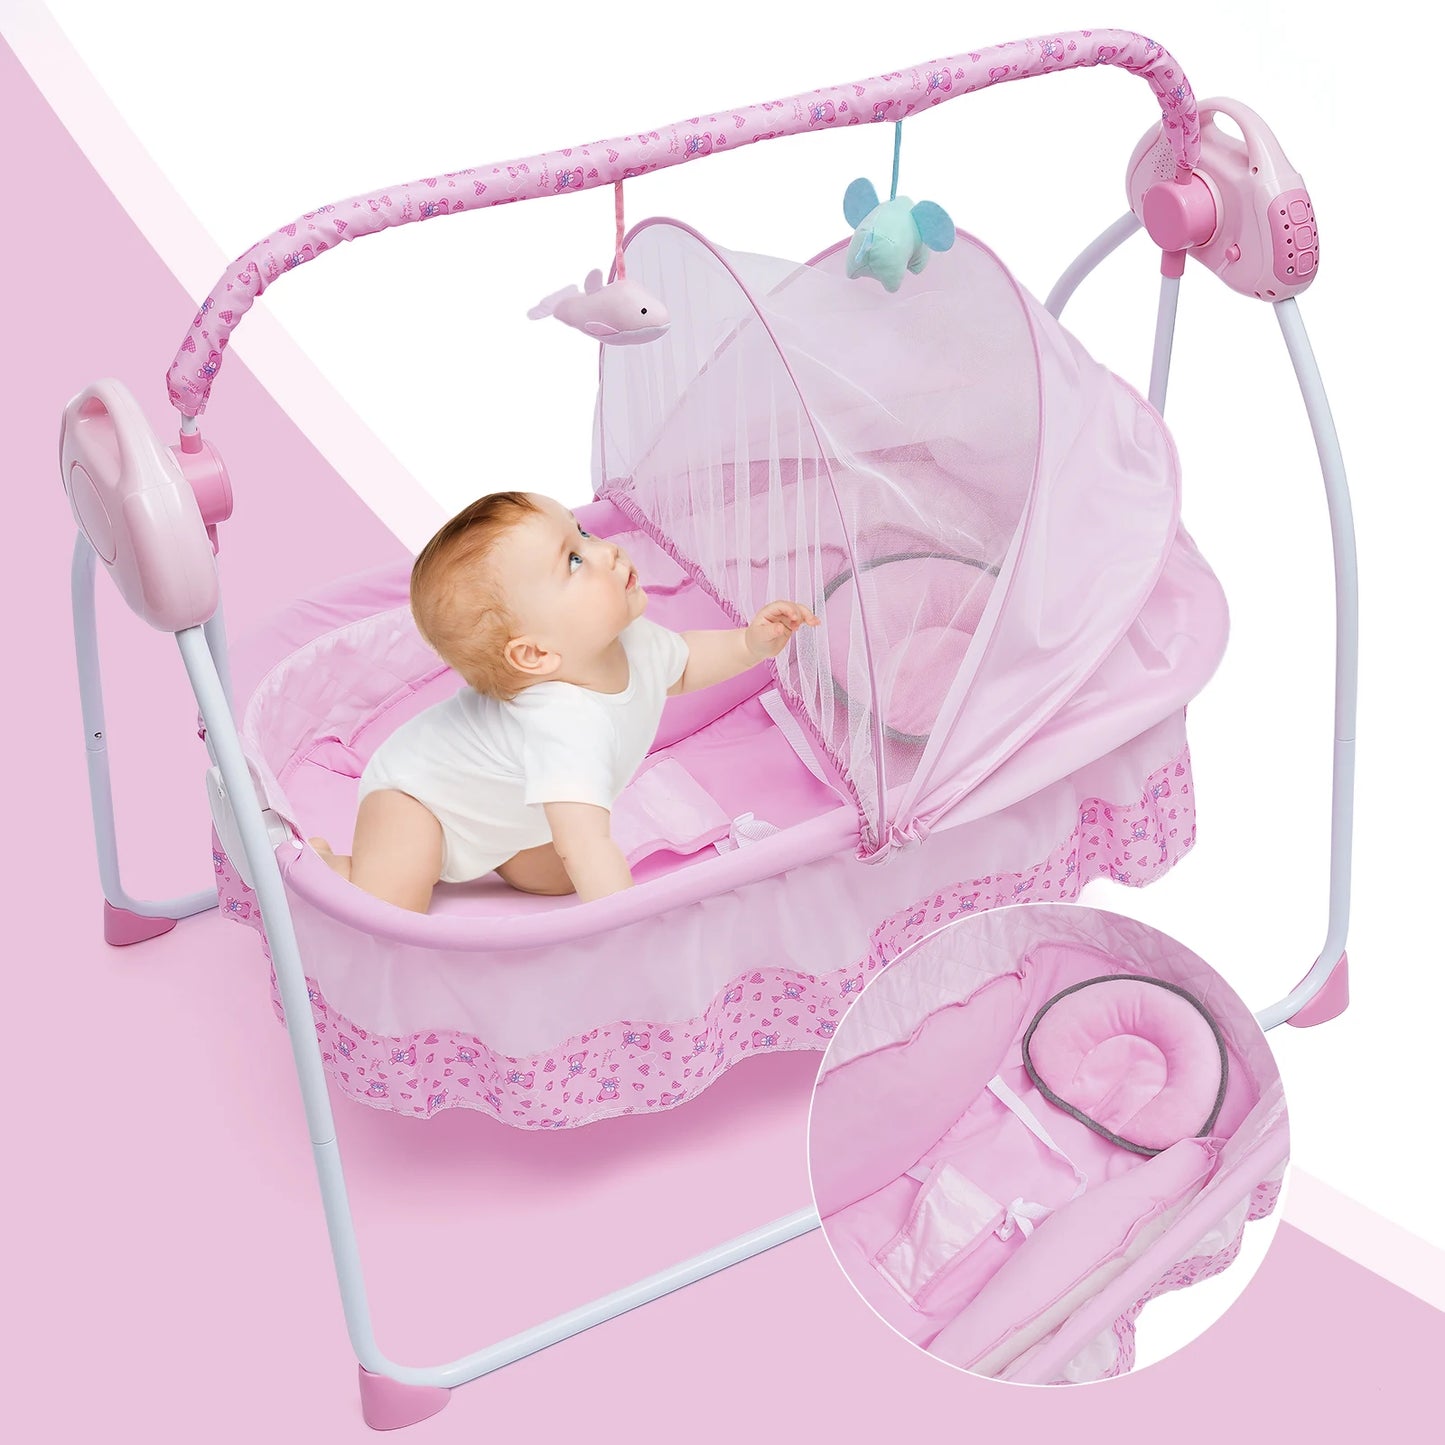 5 Gears Electric Auto-Swing Baby Crib Cradle Sleep Bed